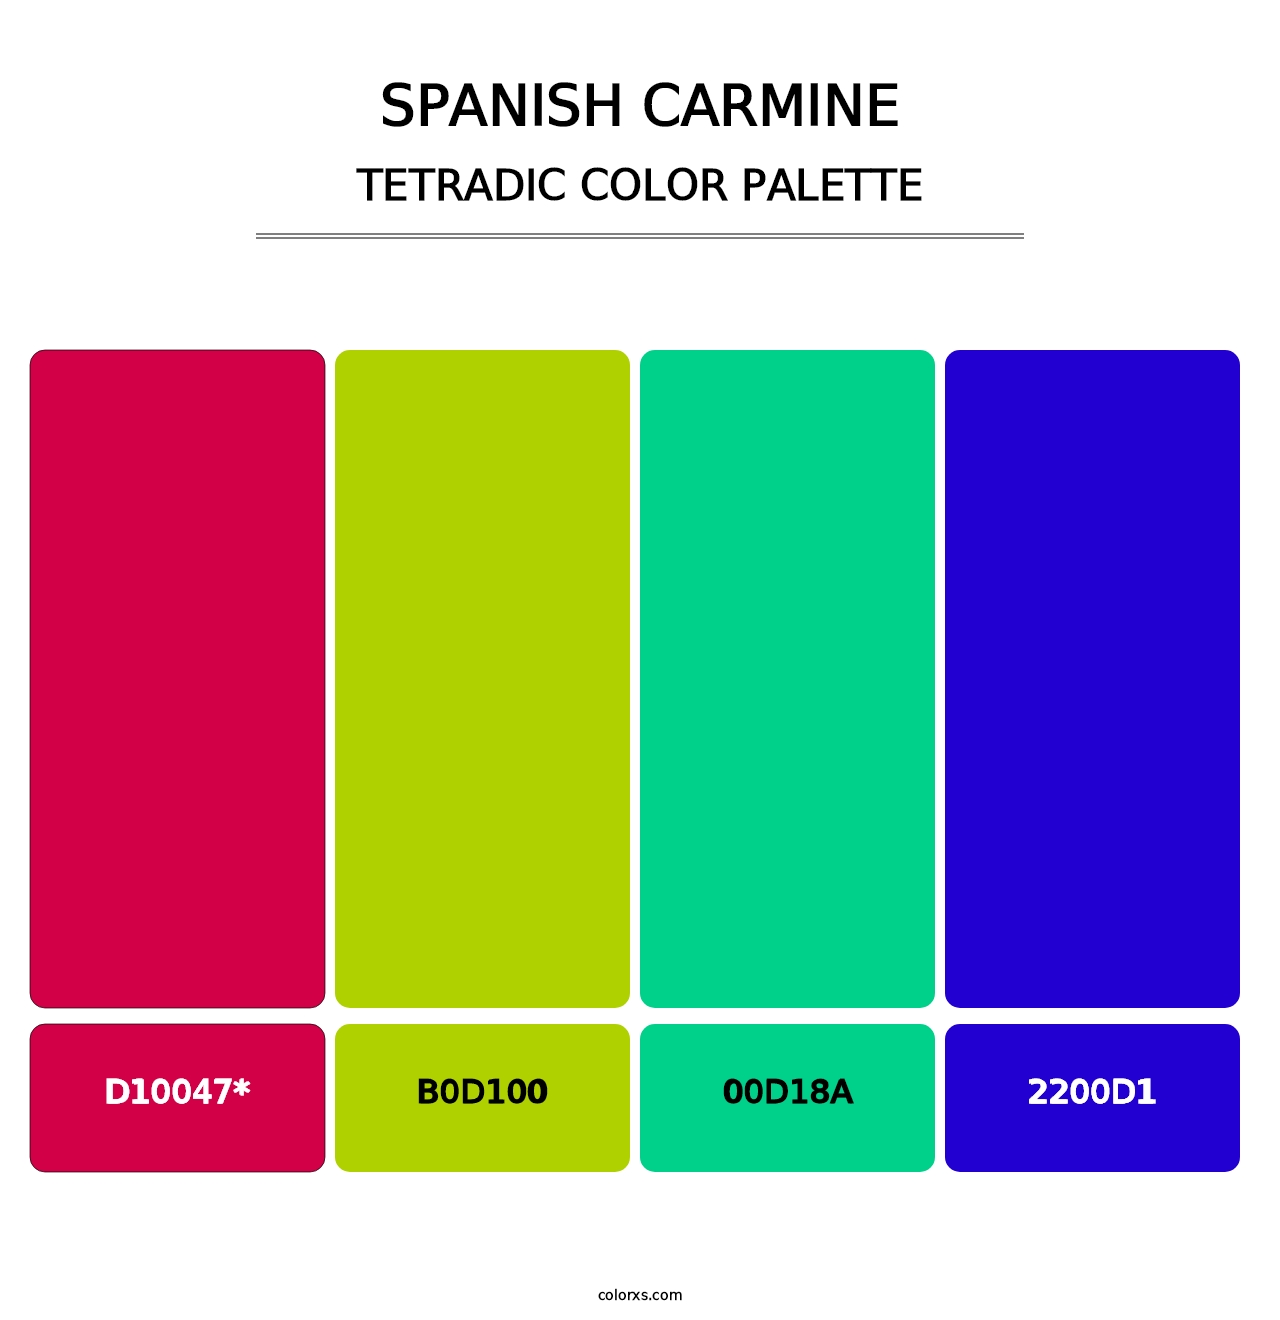 Spanish Carmine - Tetradic Color Palette